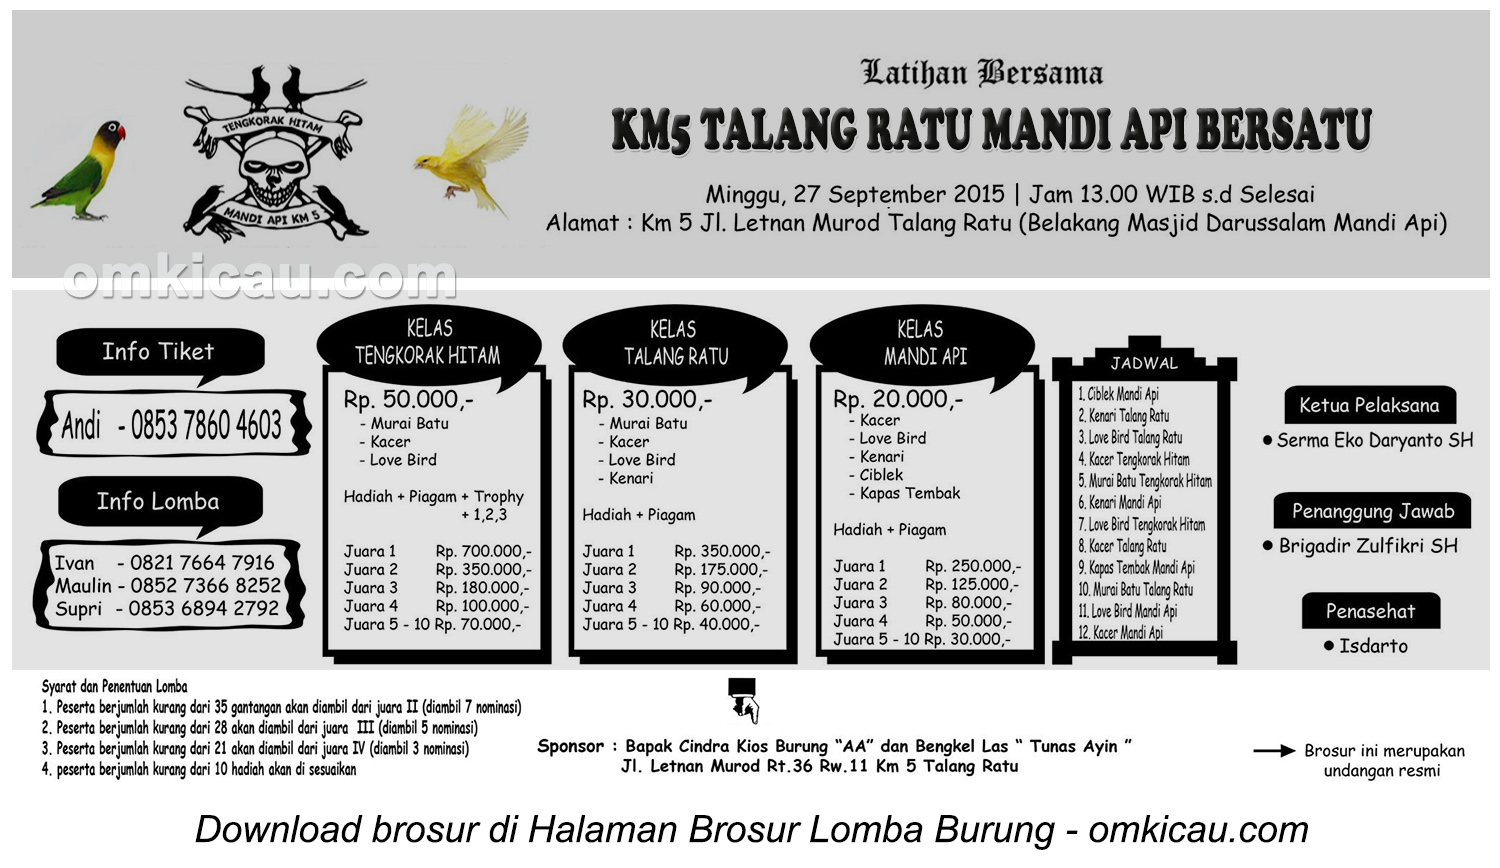 Brosur Latber KM5 Talang Ratu Mandi Api, Palembang, 27 September 2015